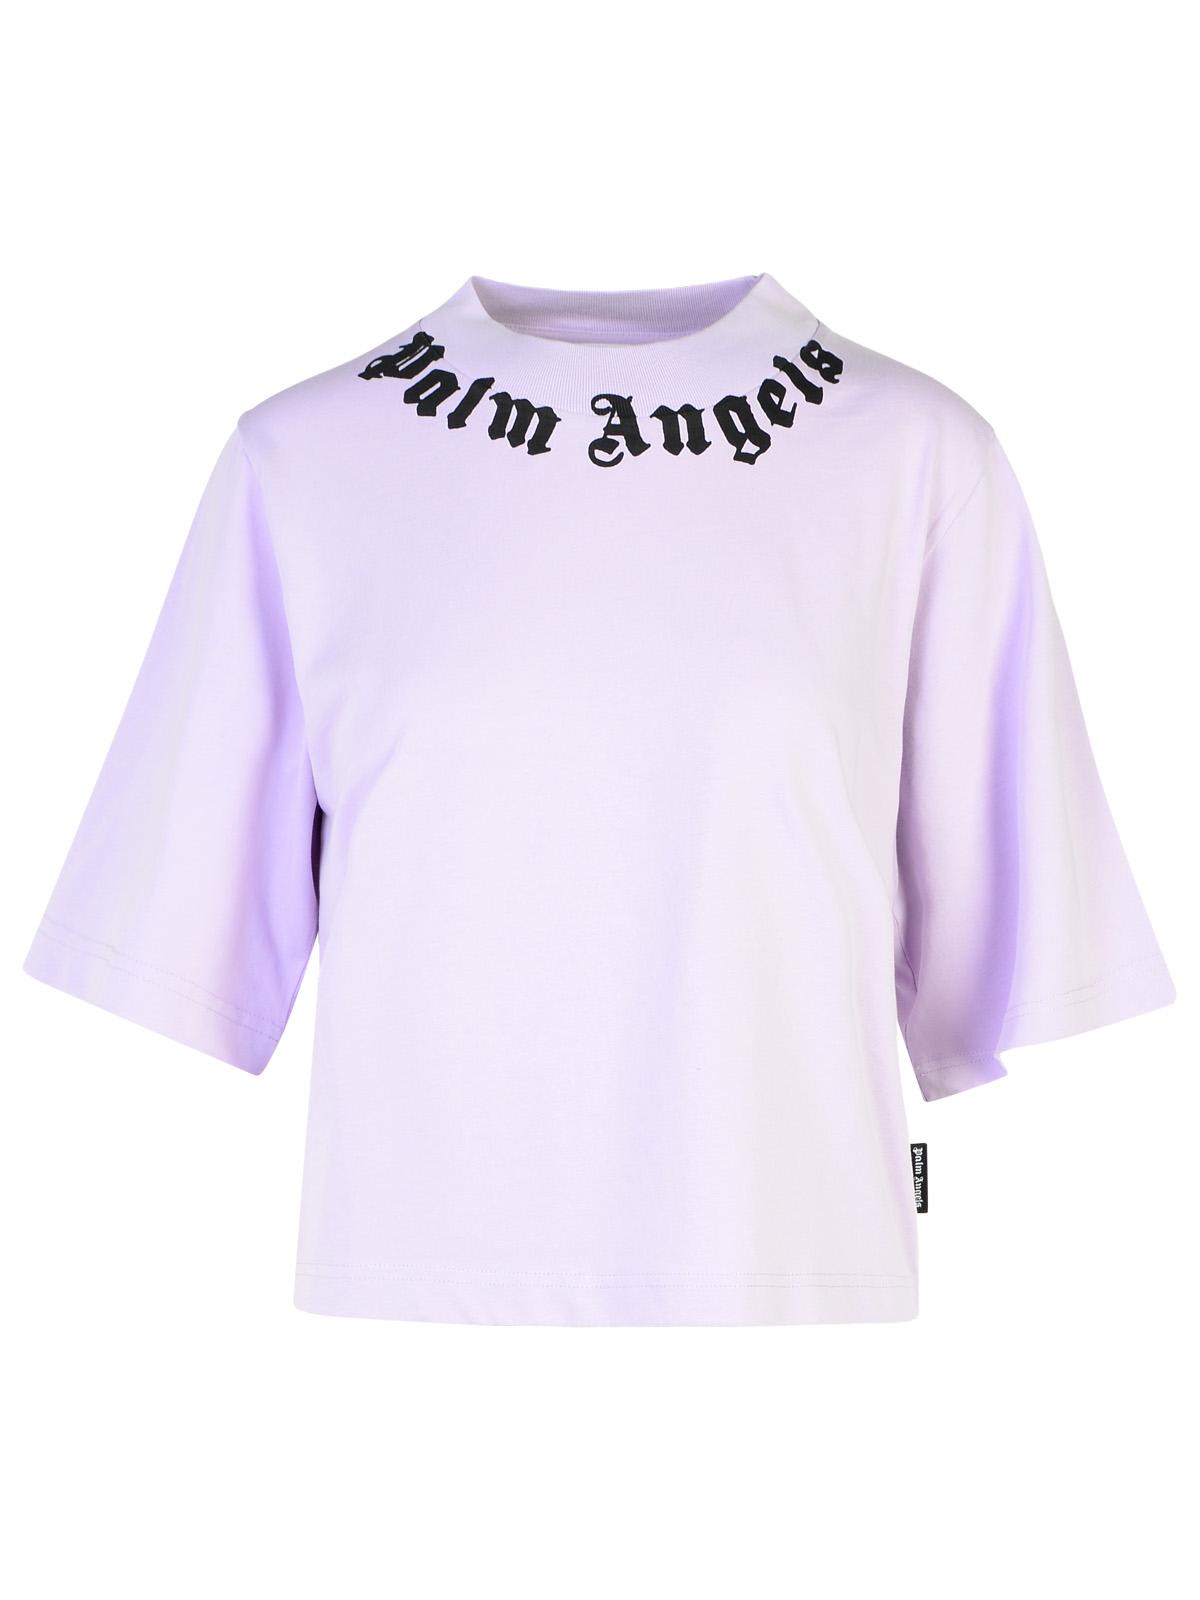 Lilac Cotton T-shirt